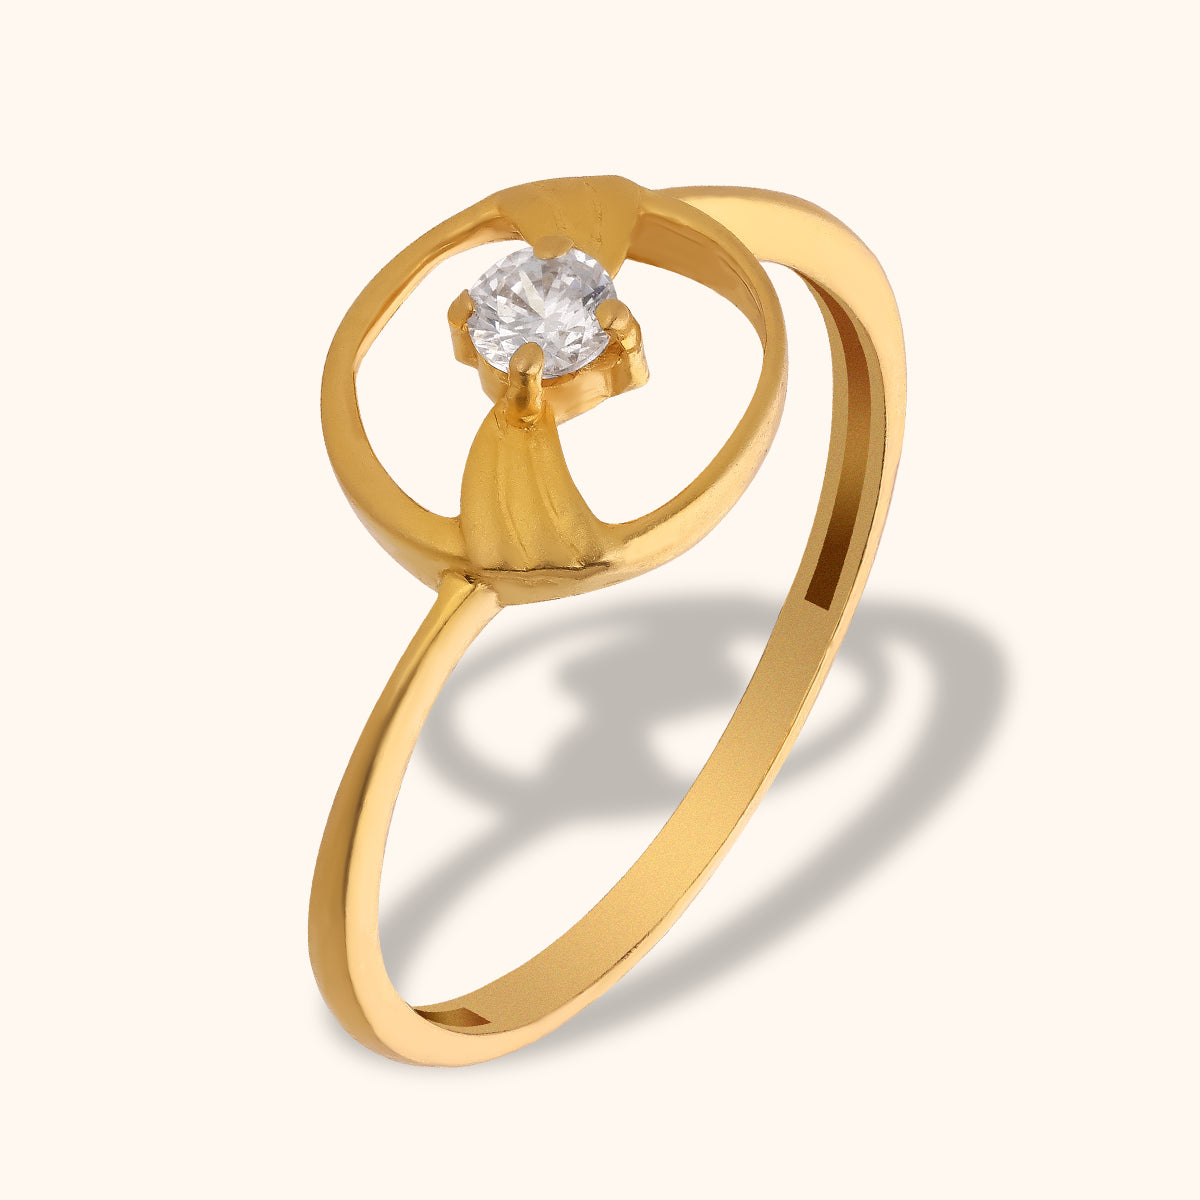 Oval Cut Moissanite & Opal Engagement Ring, Edwardian Design – Flawless  Moissanite